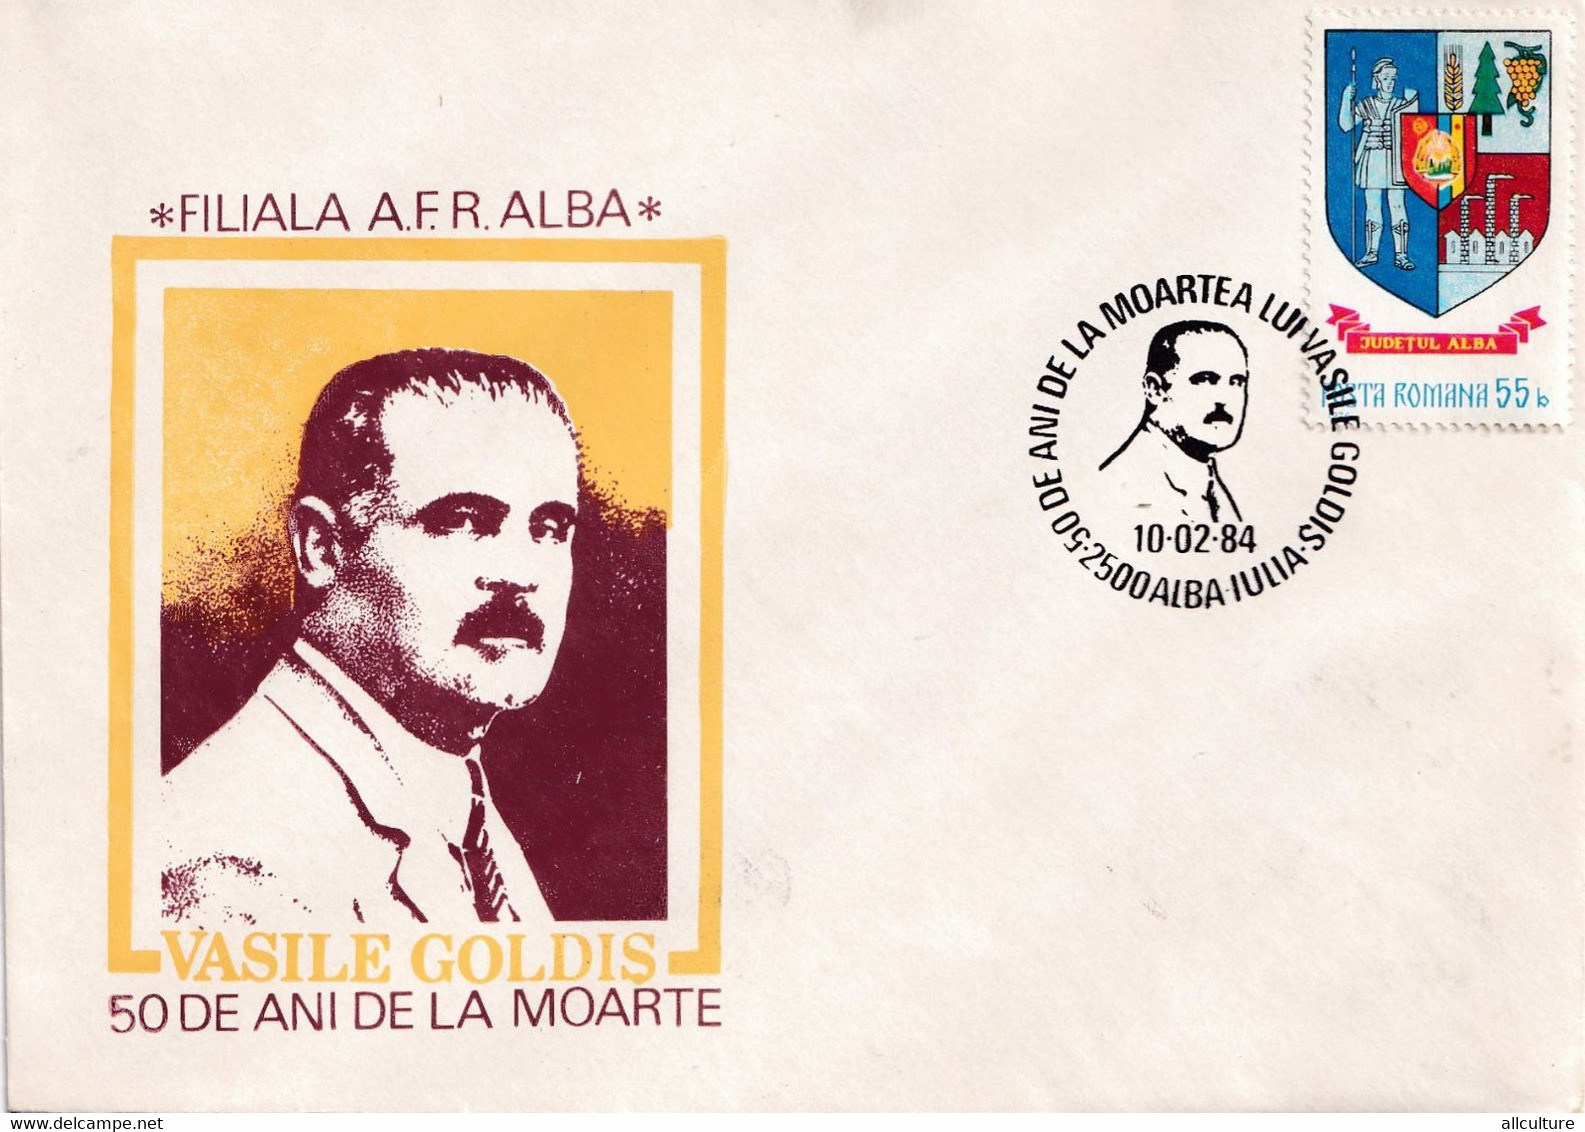 A2643 - Vasile Goldis, 50 Ani De La Moarte, Filiala A.F.R. ALBA,  Stamp Alba-Iulia 1984 Romania - Covers & Documents